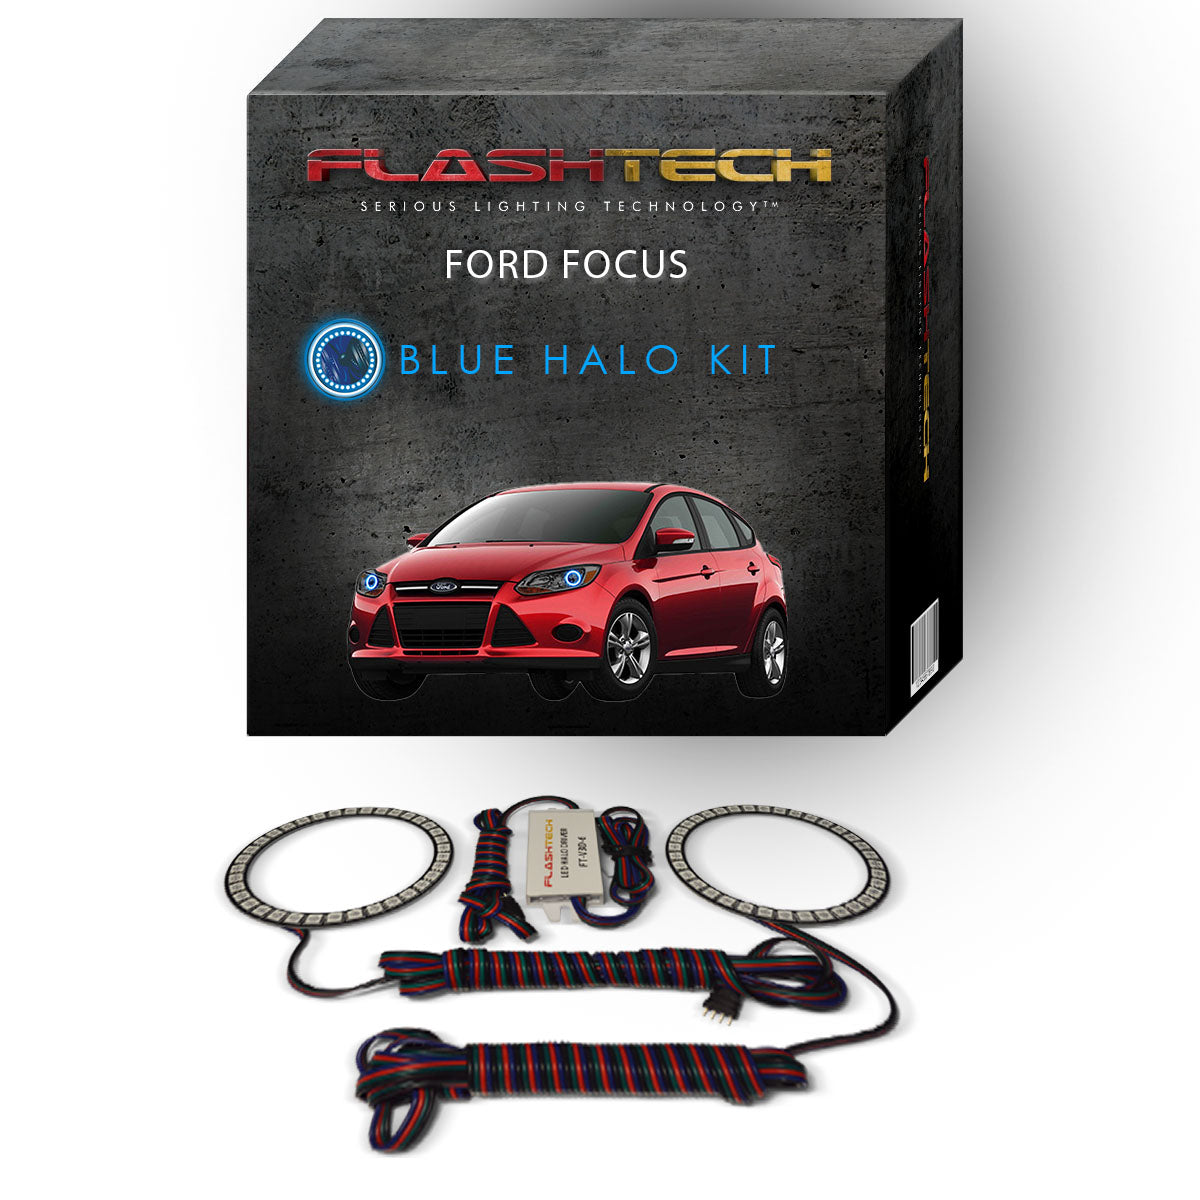 Ford-Focus-2012, 2013, 2014, 2015-LED-Halo-Headlights-RGB-No Remote-FO-FC1215-V3H